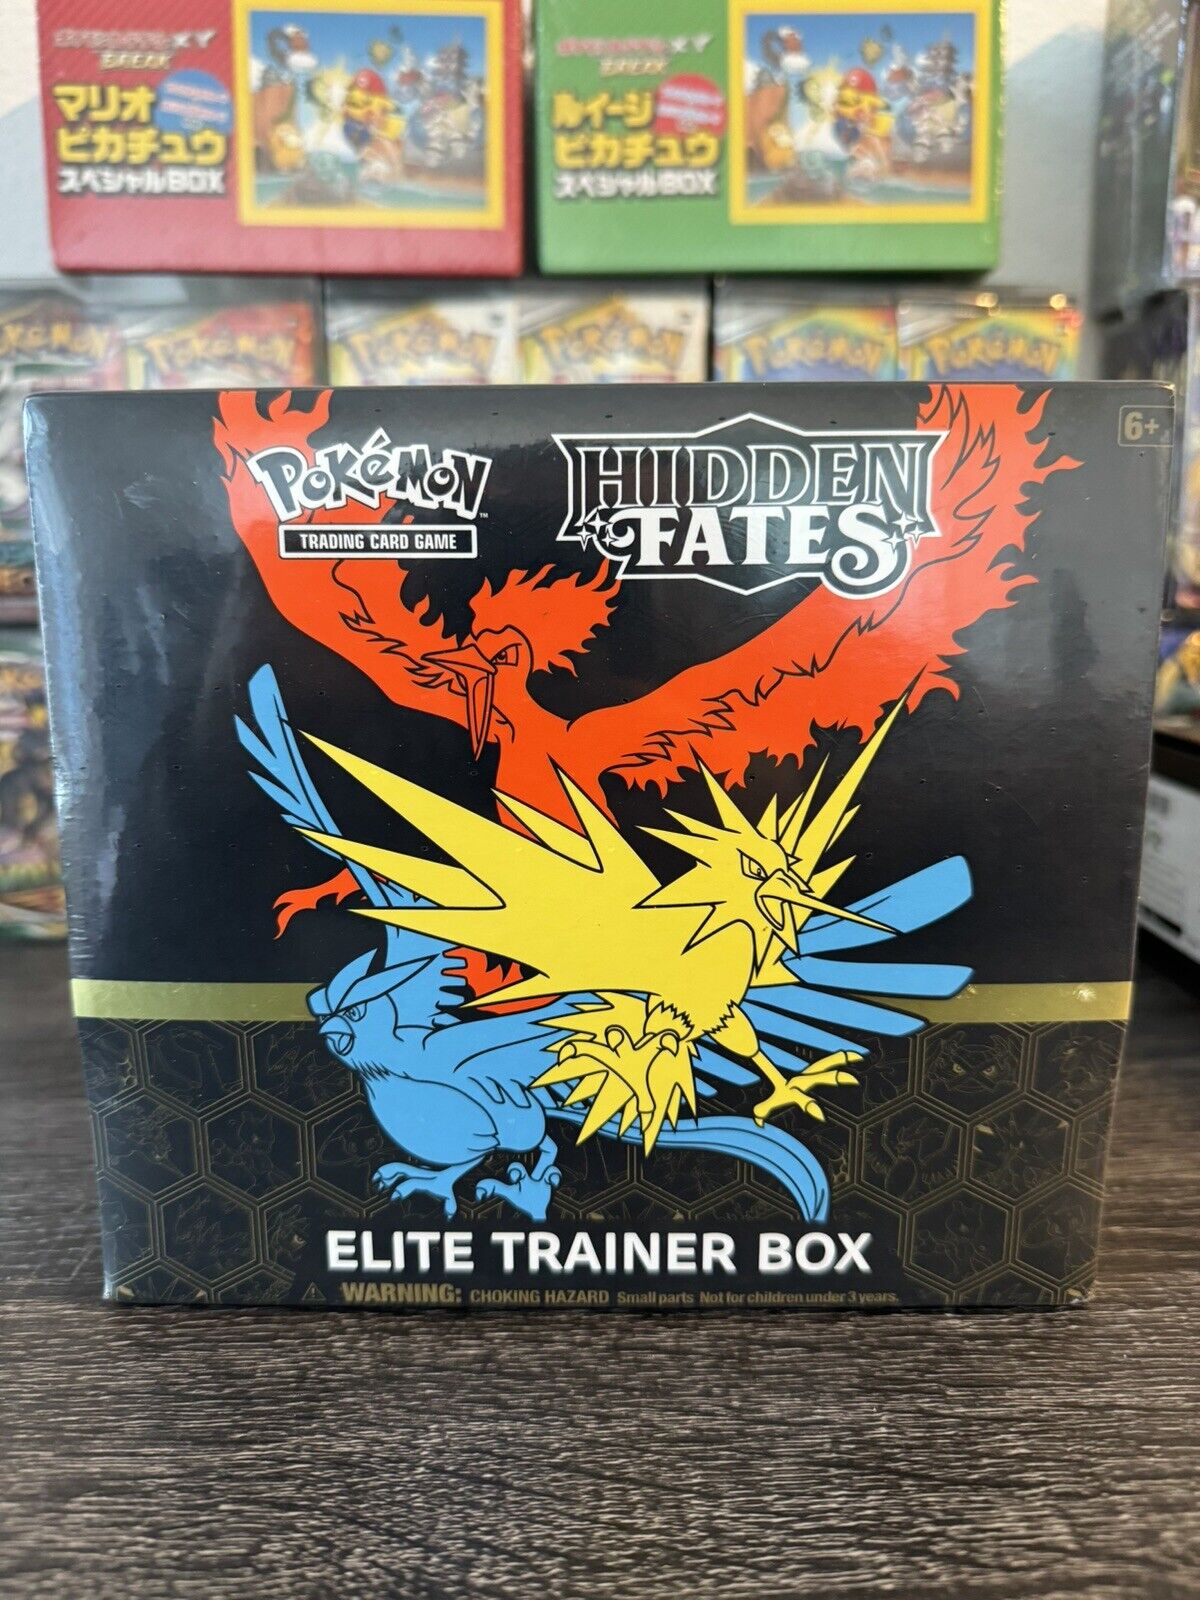 2019 Pokémon TCG: Hidden Fates Elite Trainer Box ETB Sealed